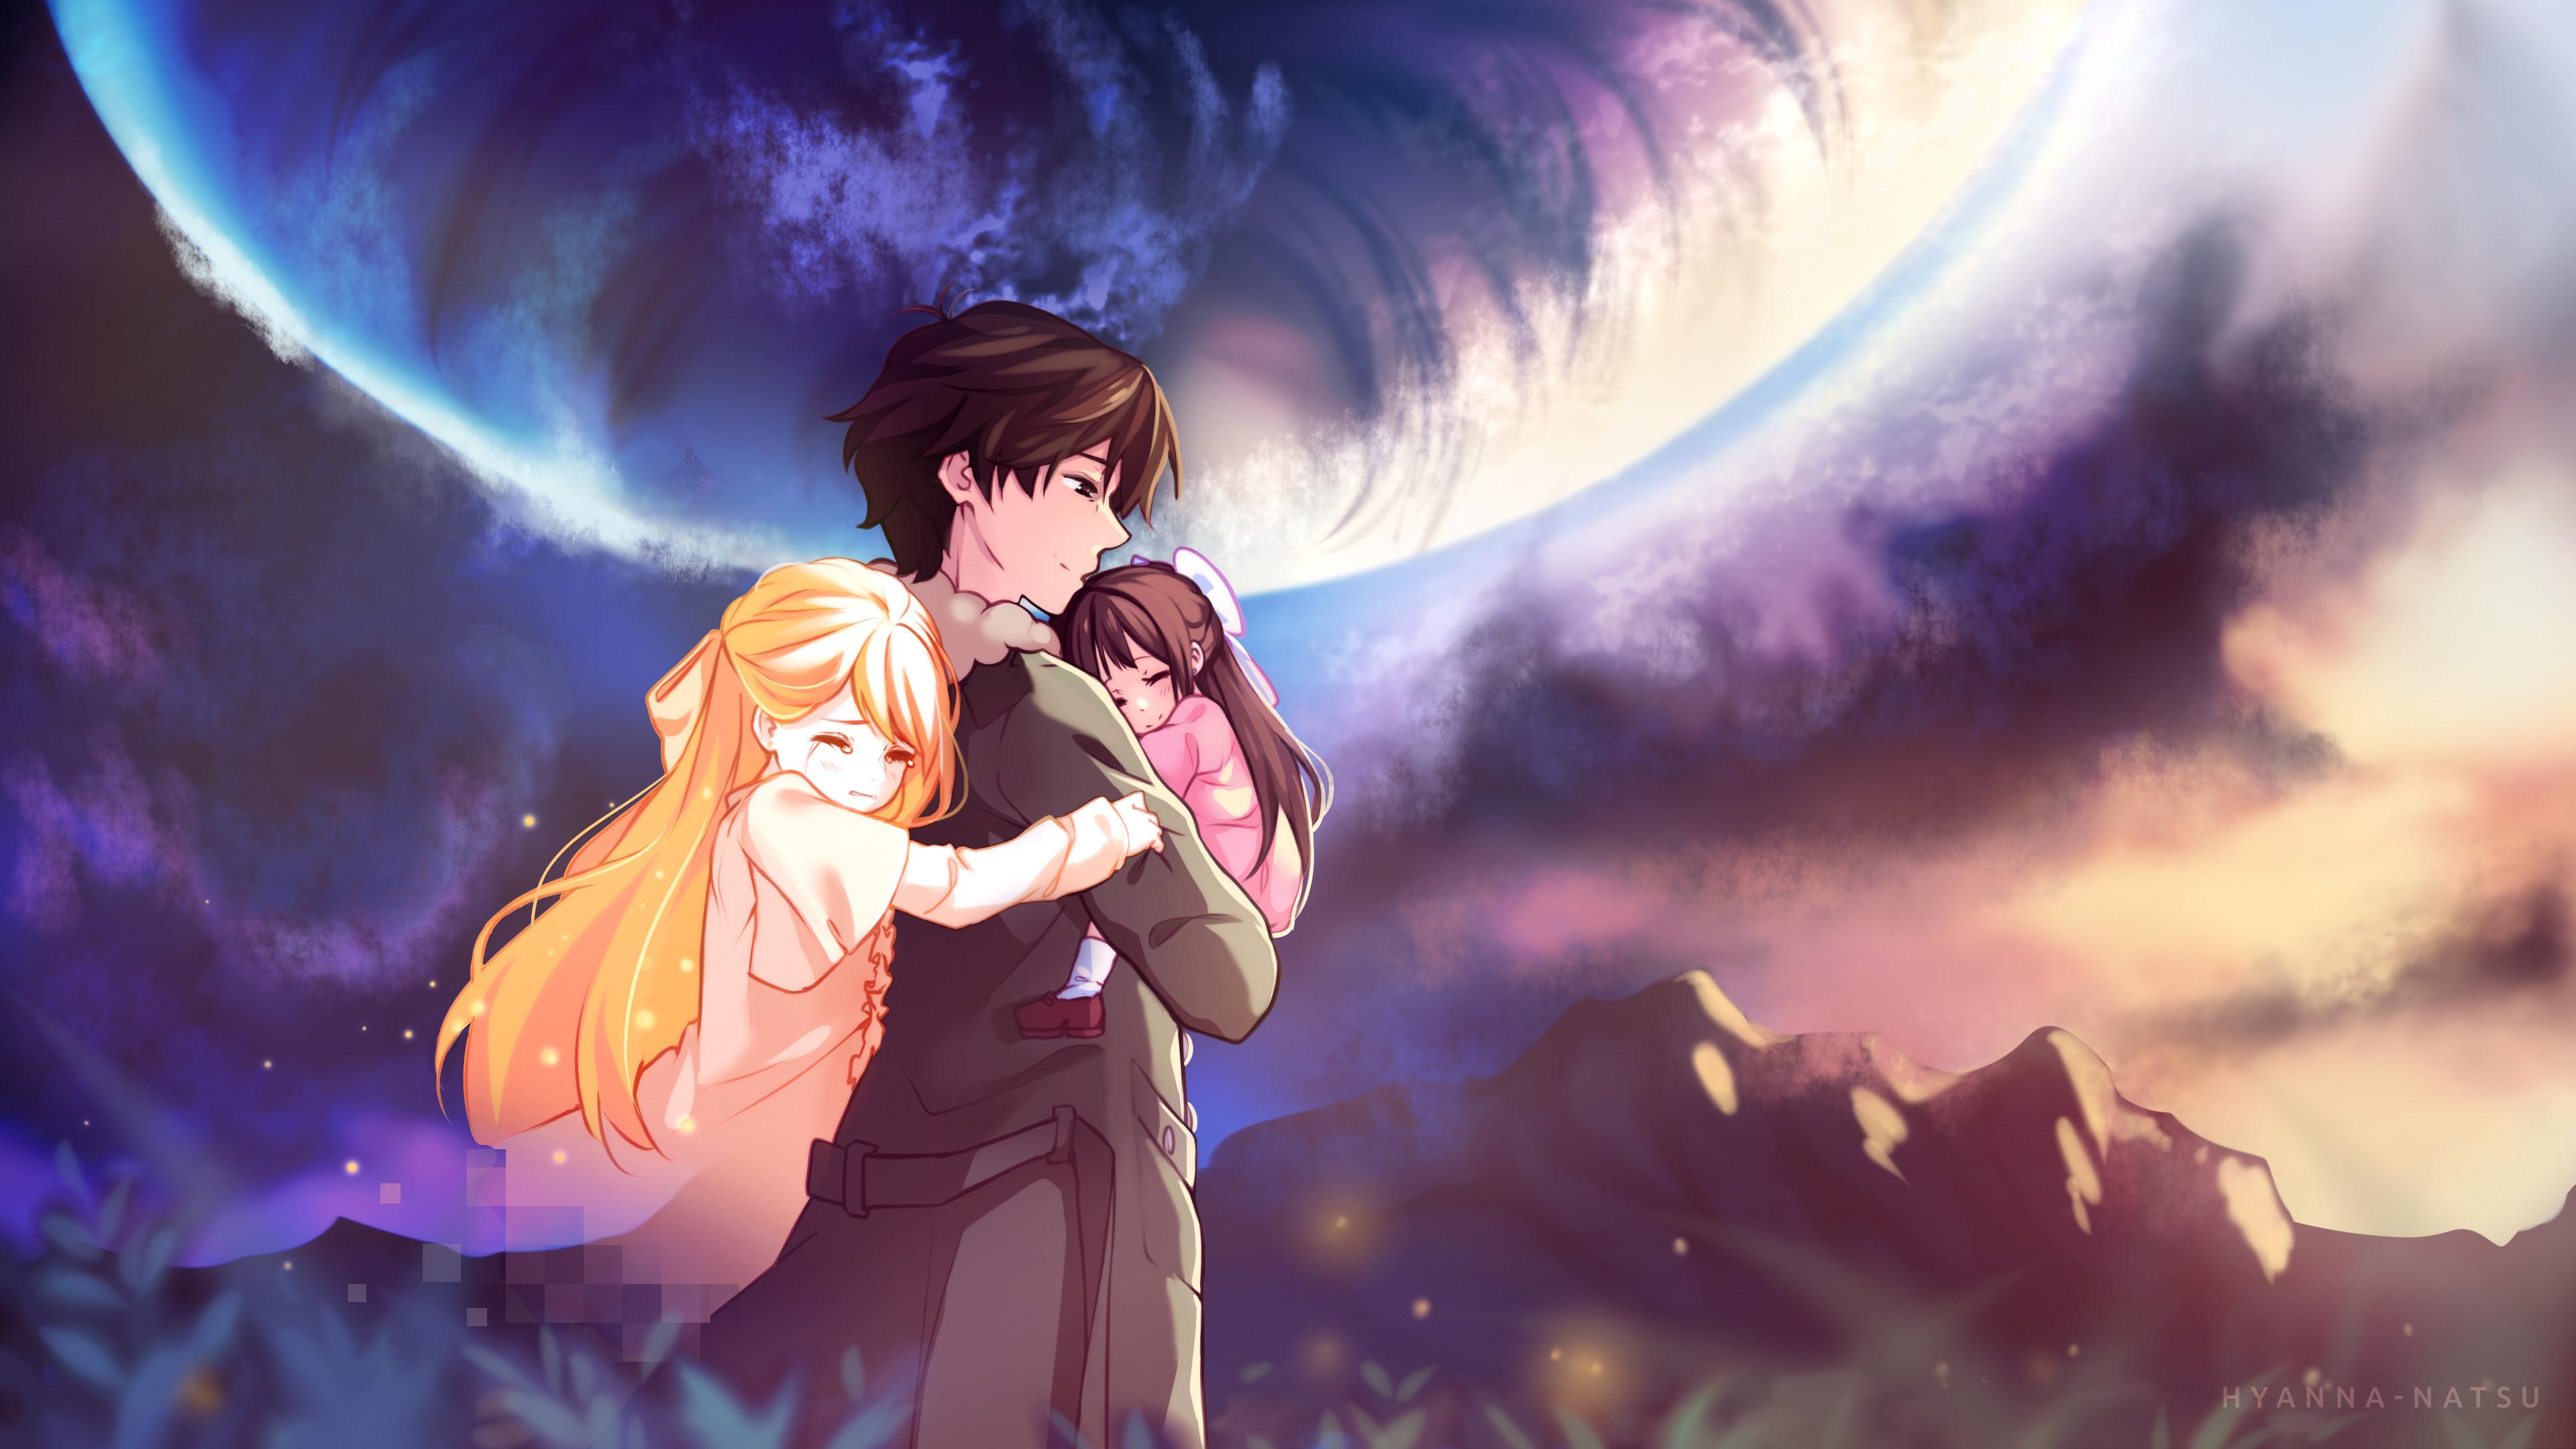 Anime Boy And Girl In Love Porter Robinson Anime